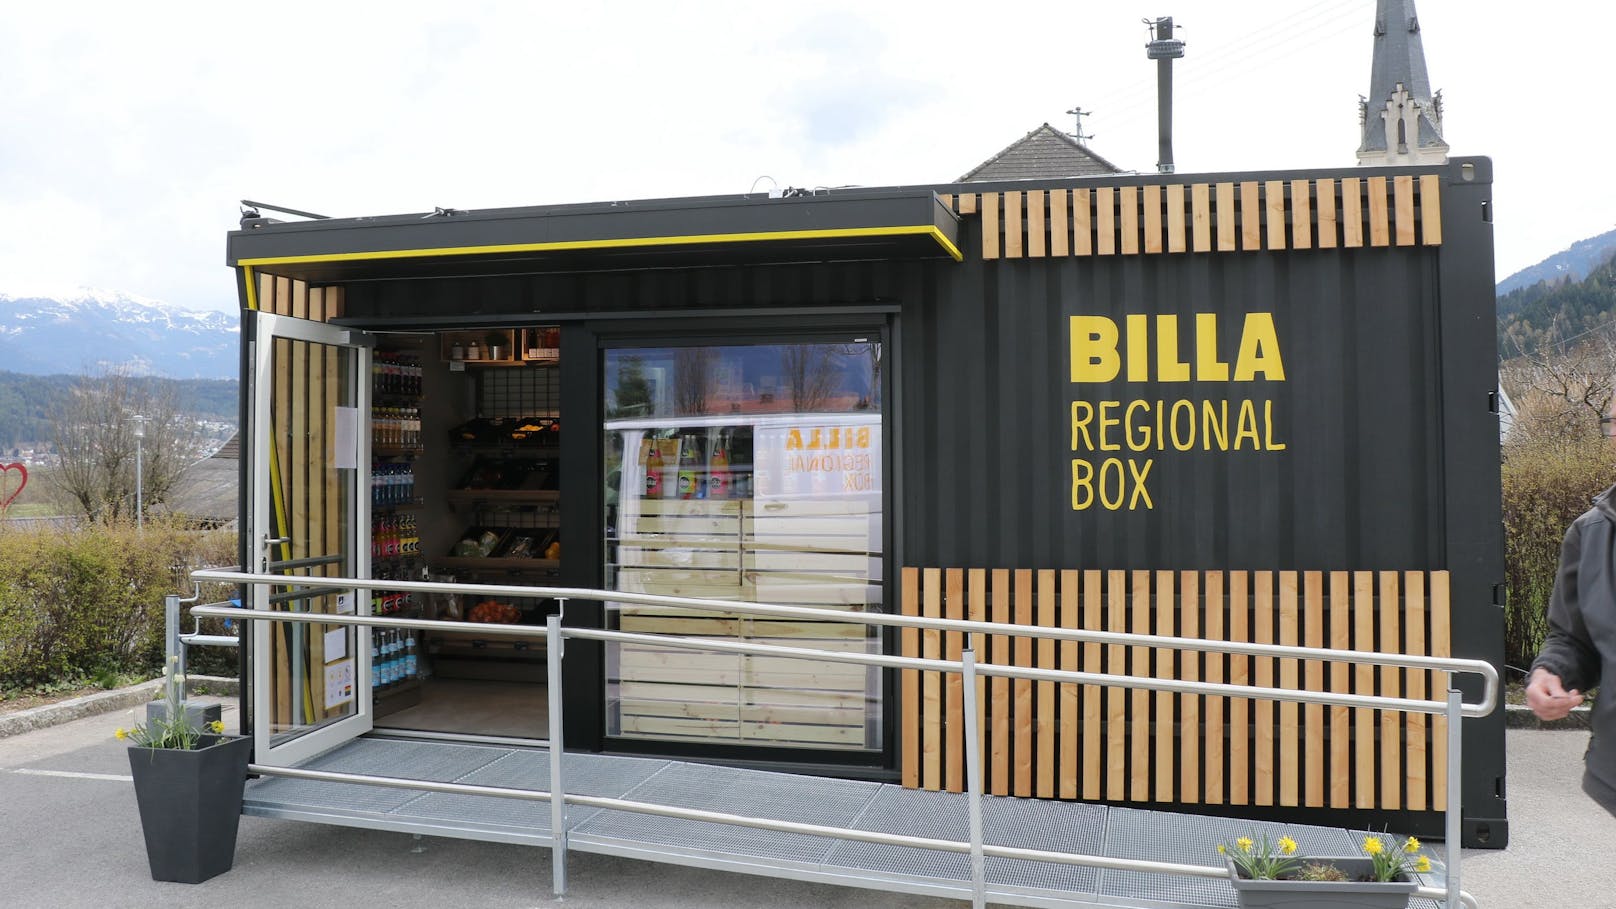 Die Billa Regional Box in Baldramsdorf (Kärnten).